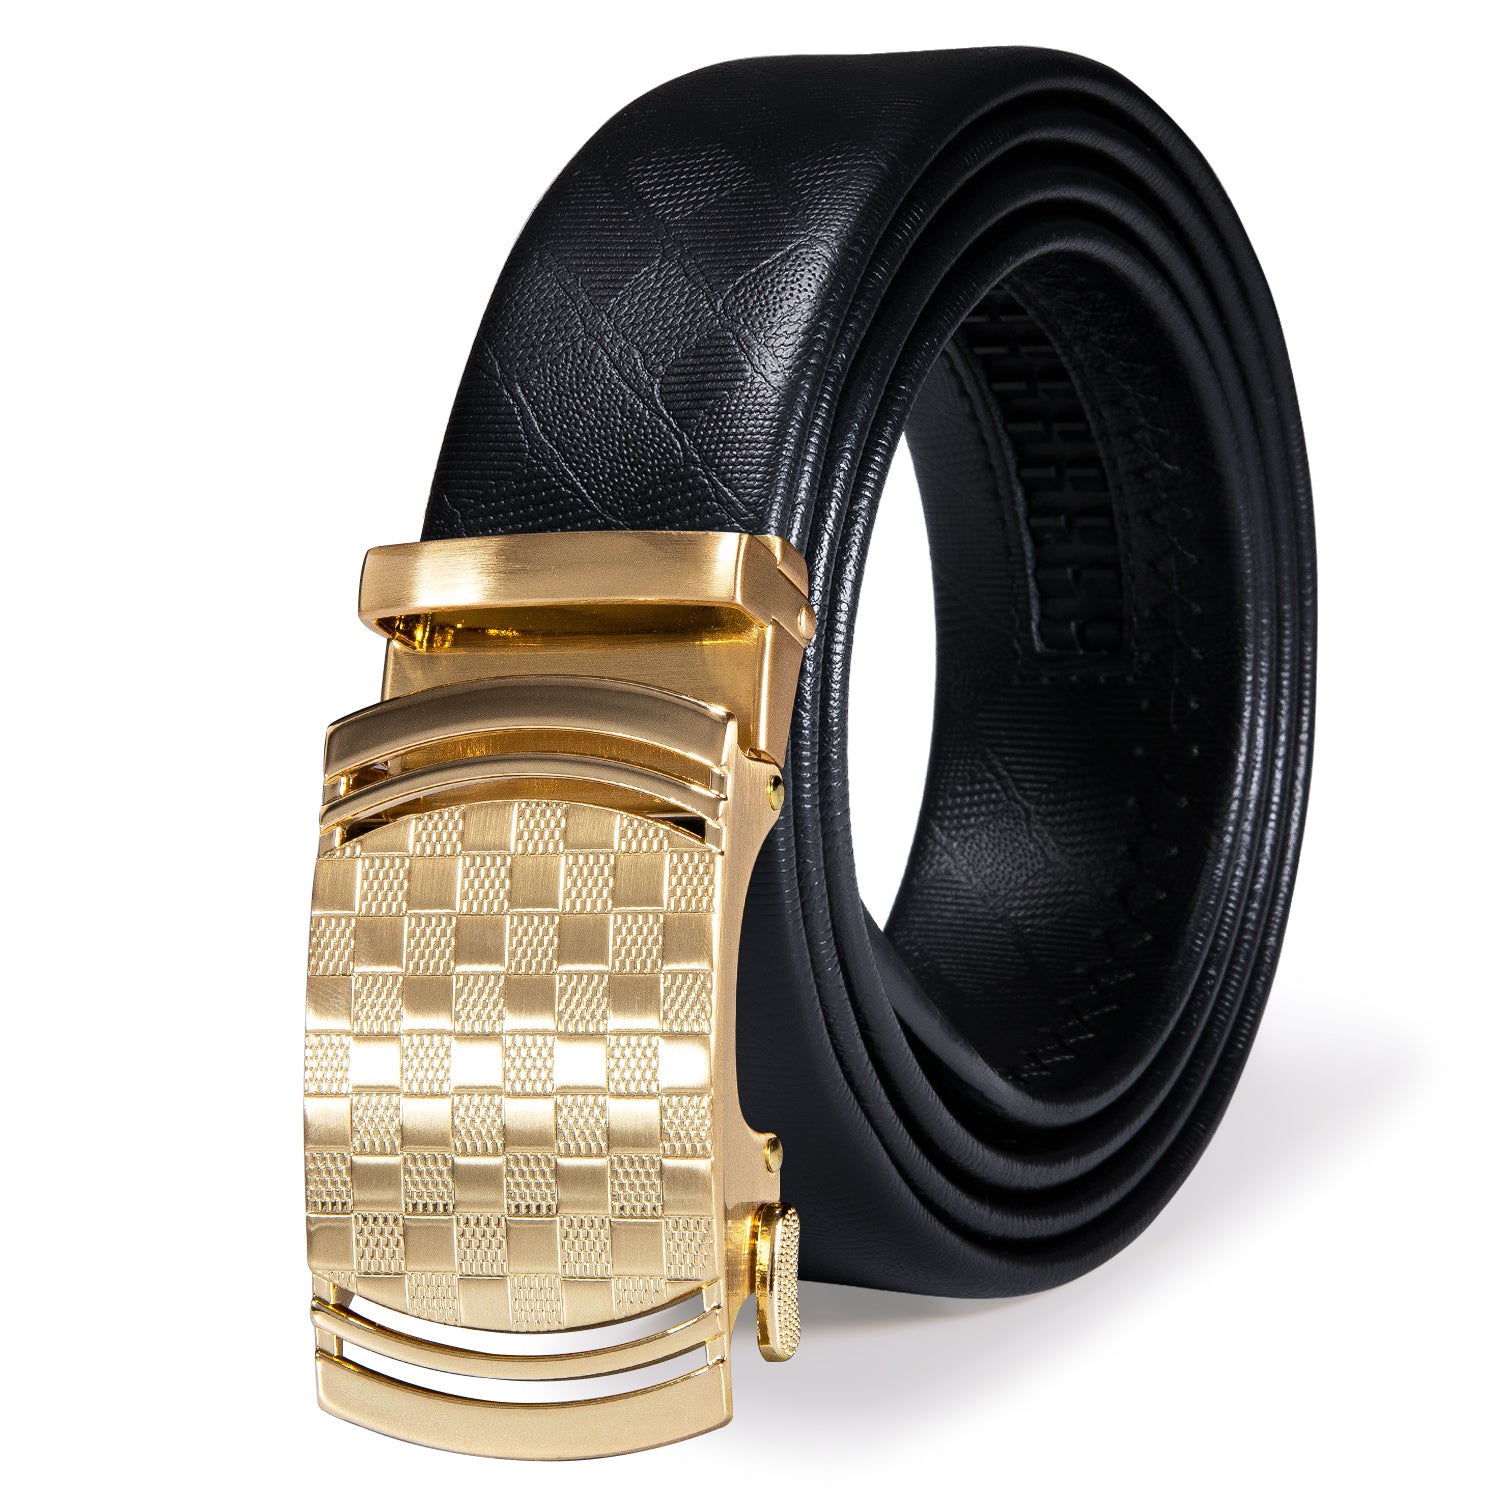 Barry.wang Men's Belt Golden Plaid Metal Buckle Genuine Leather Belt 43 inch to 63 inch